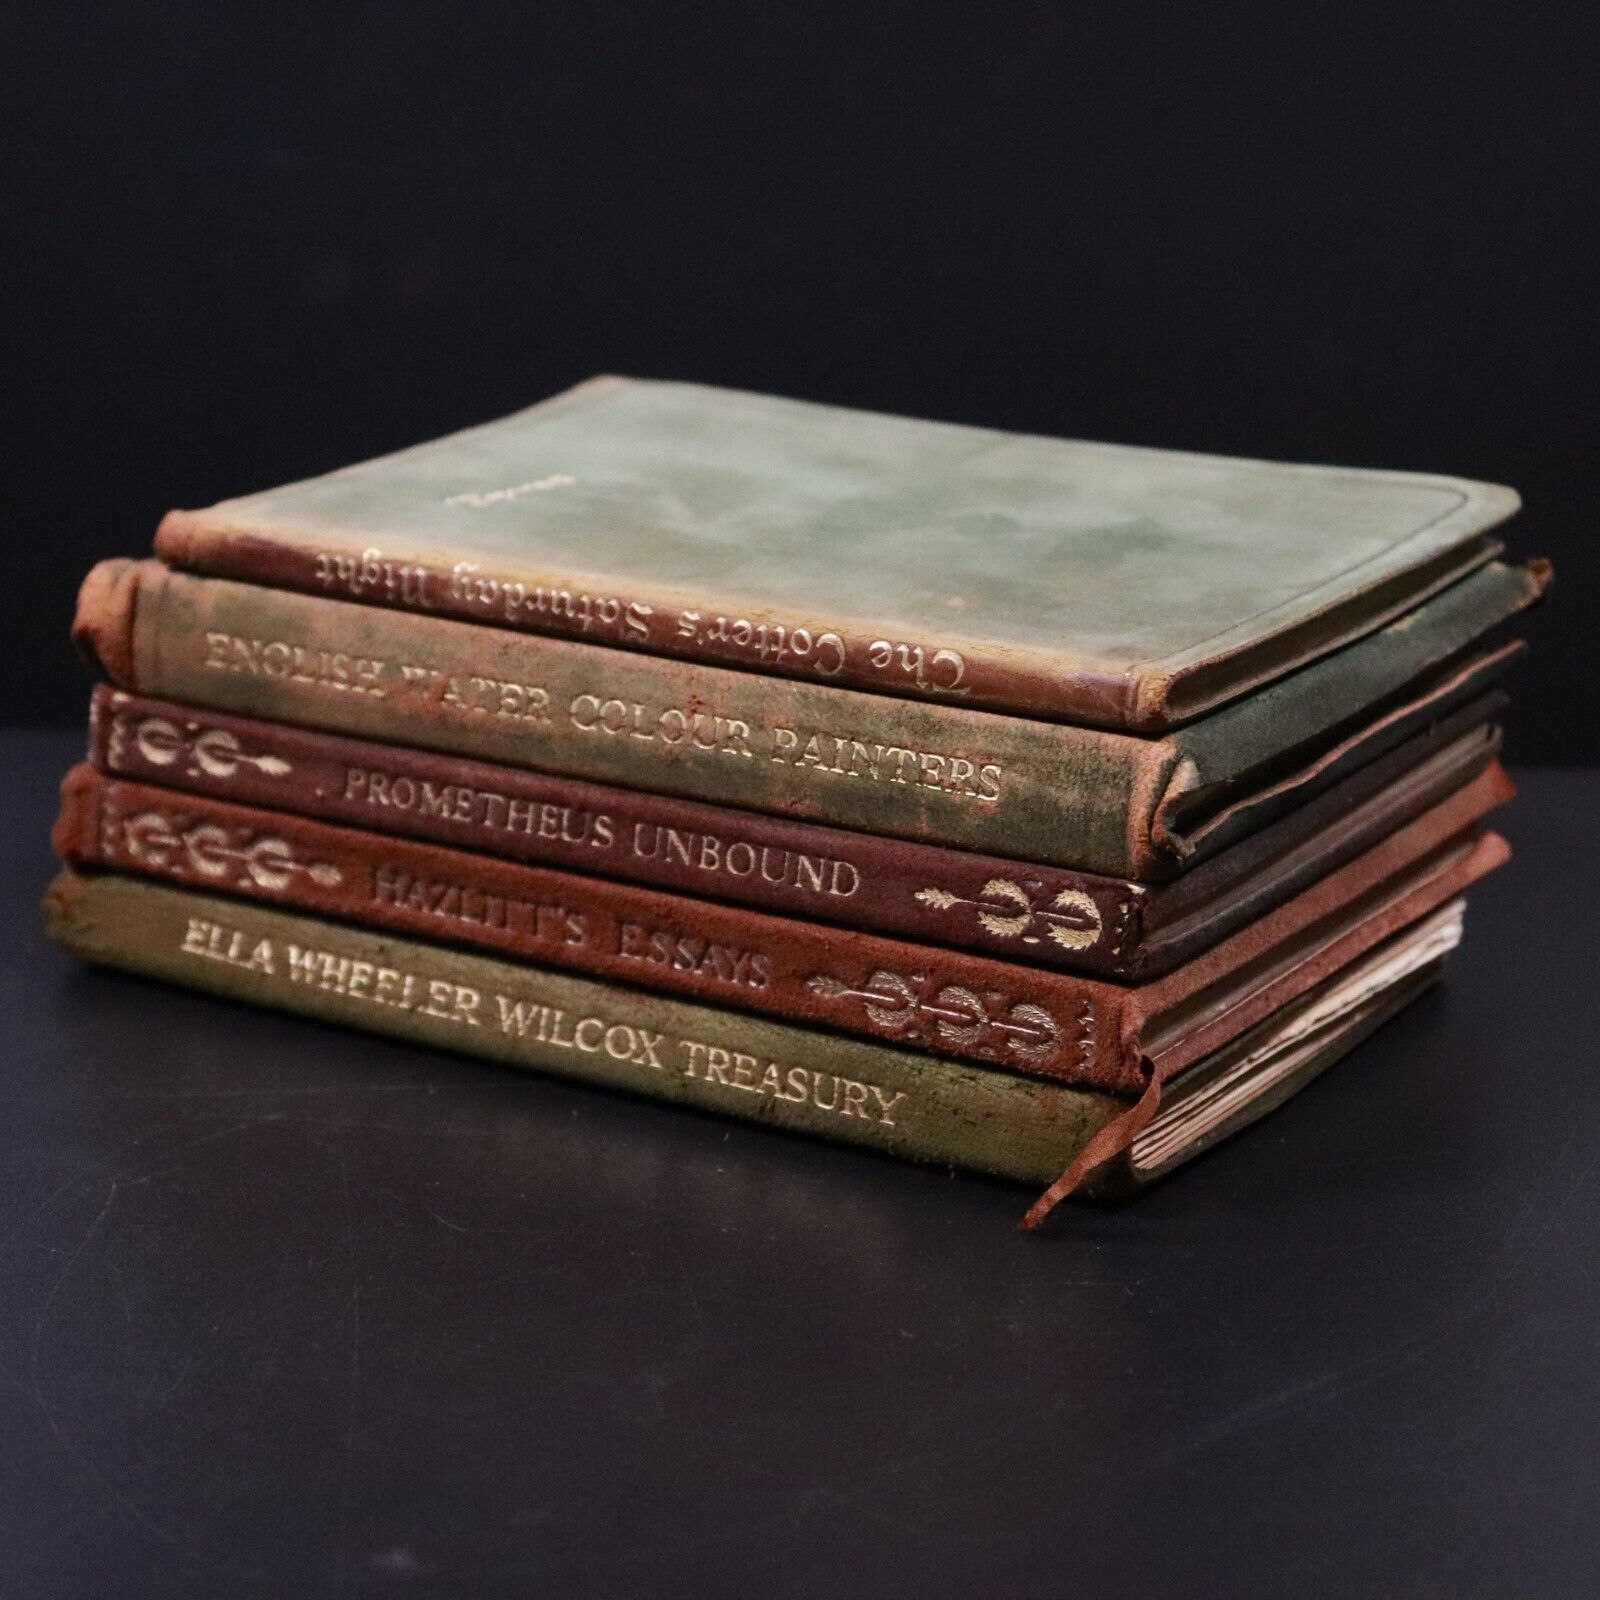 c1905 5vol Suede Classic Literature Book Collection - Shelley Burns Wilcox etc